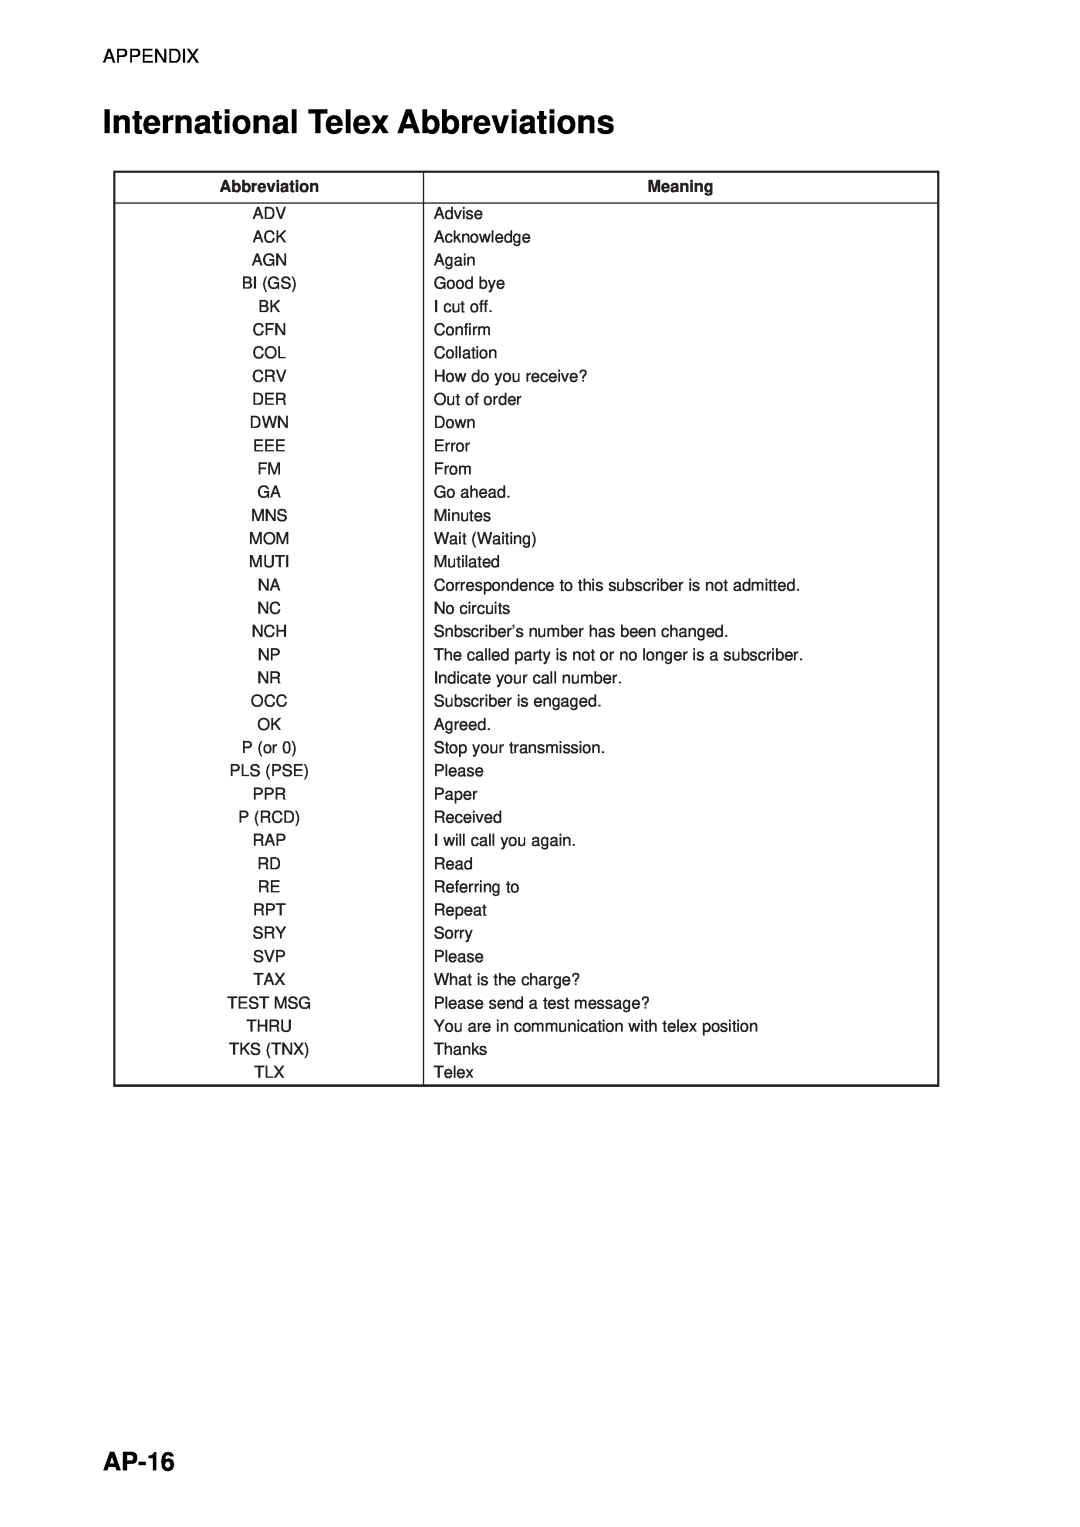 Furuno manual International Telex Abbreviations, AP-16, Meaning 